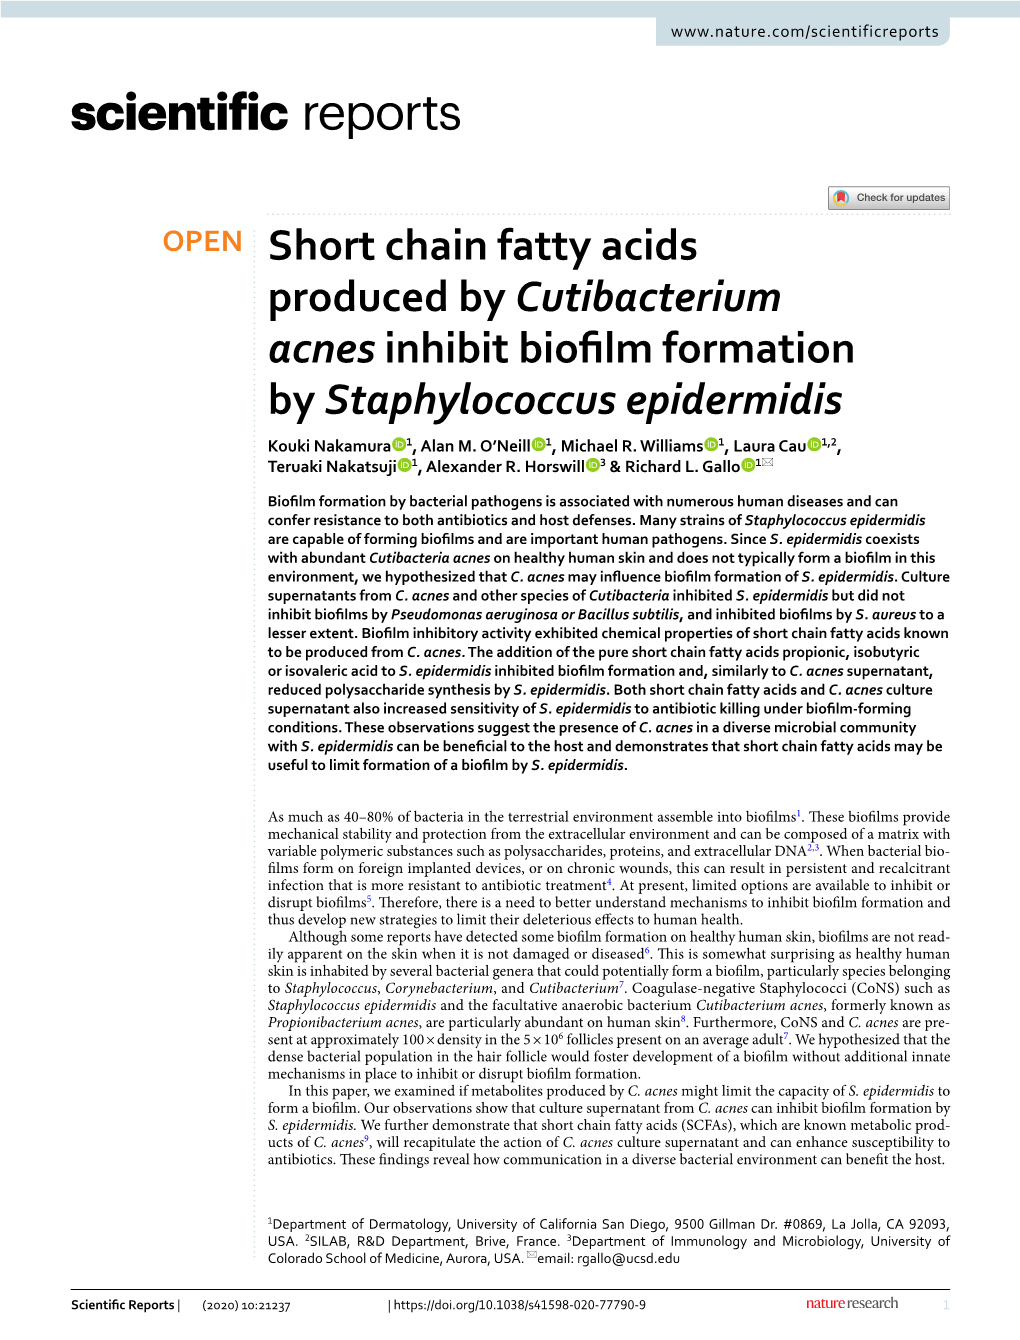 Short Chain Fatty Acids Produced by Cutibacterium Acnes Inhibit Biofilm